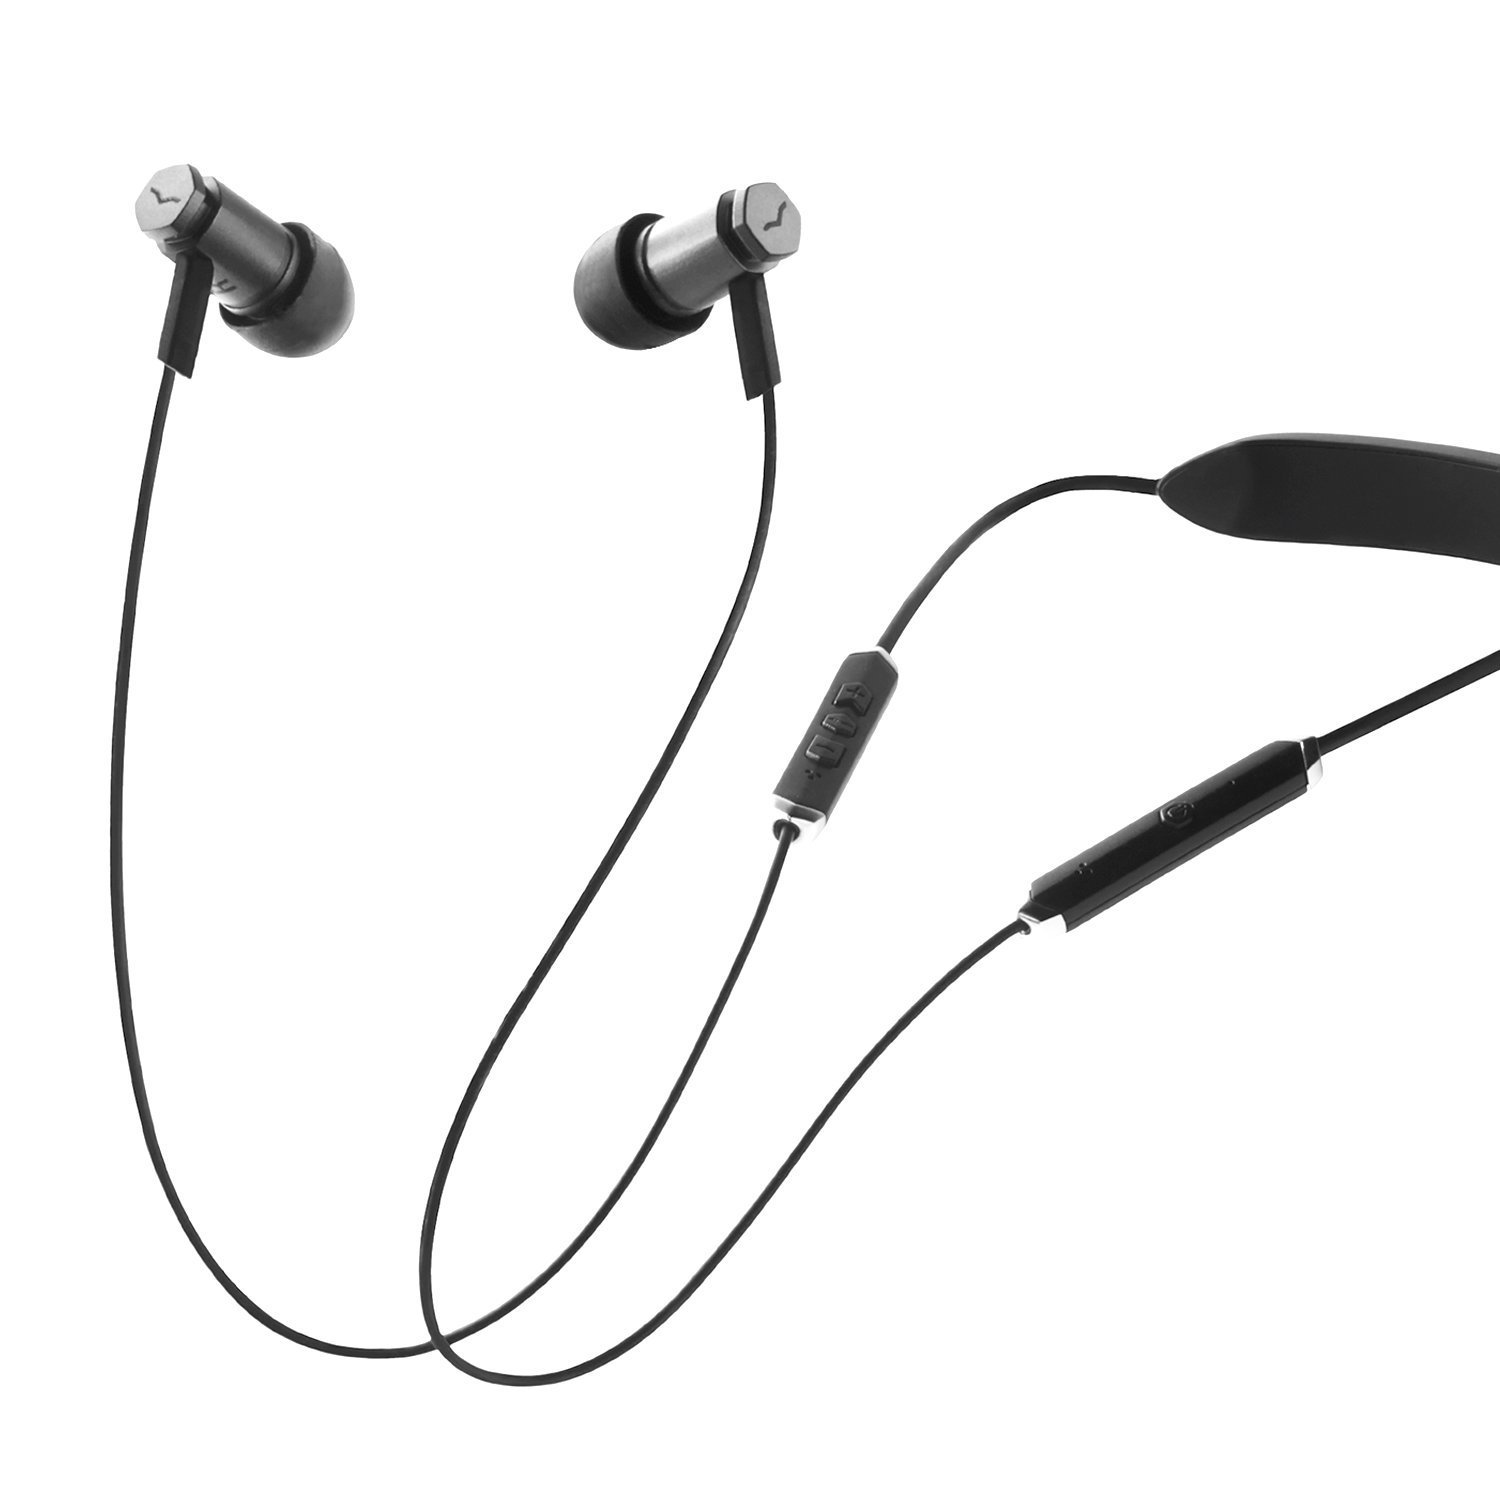 V-MODA Forza Metallo Wireless In-Ear Headphones Review